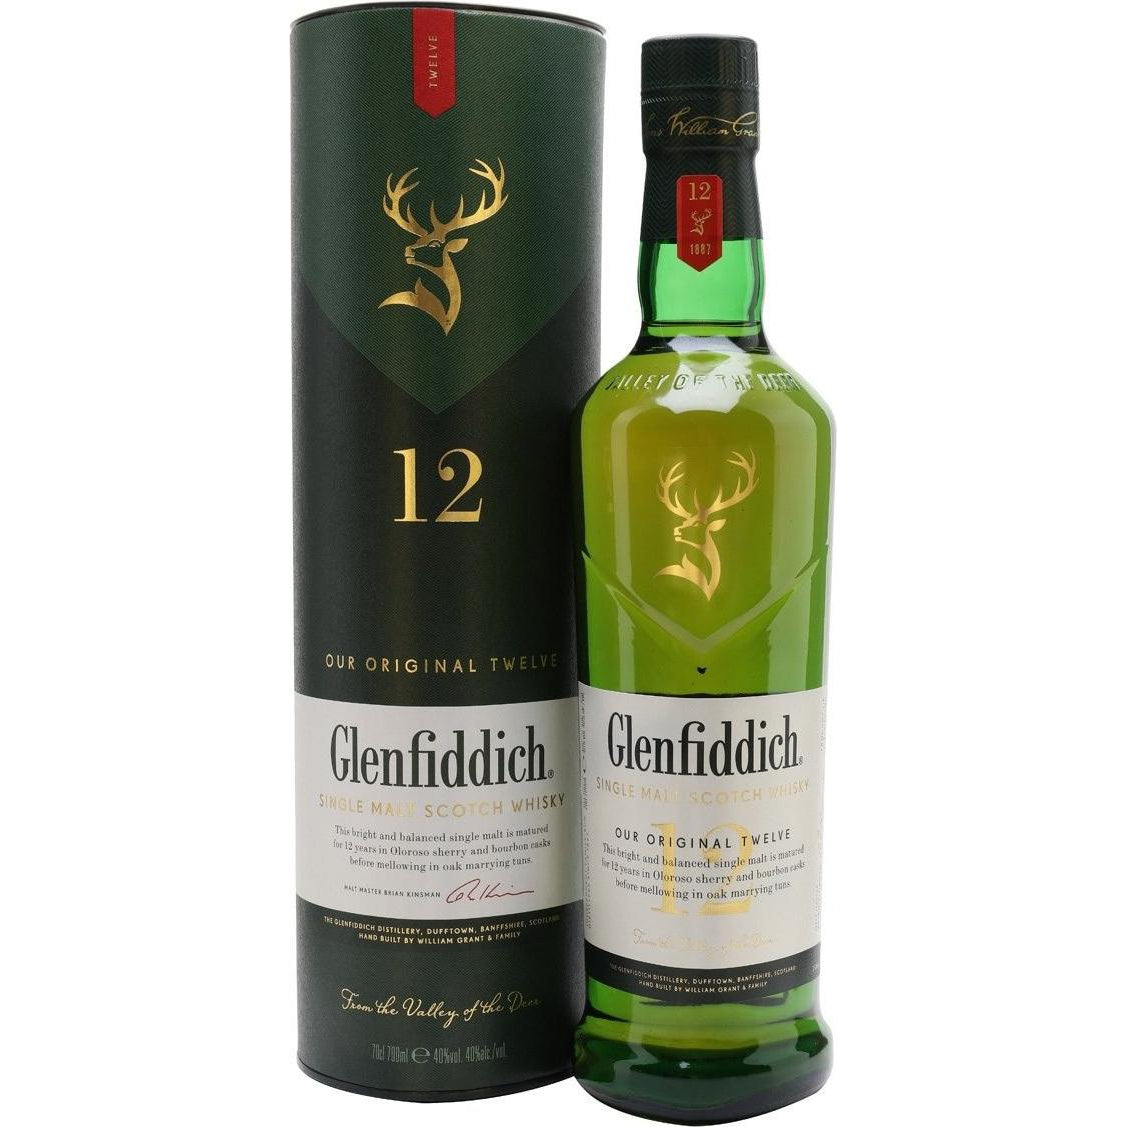 Glenfiddich 12 Years Old Single Malt Scotch Whisky 40% Vol. 0,7l in Giftbox